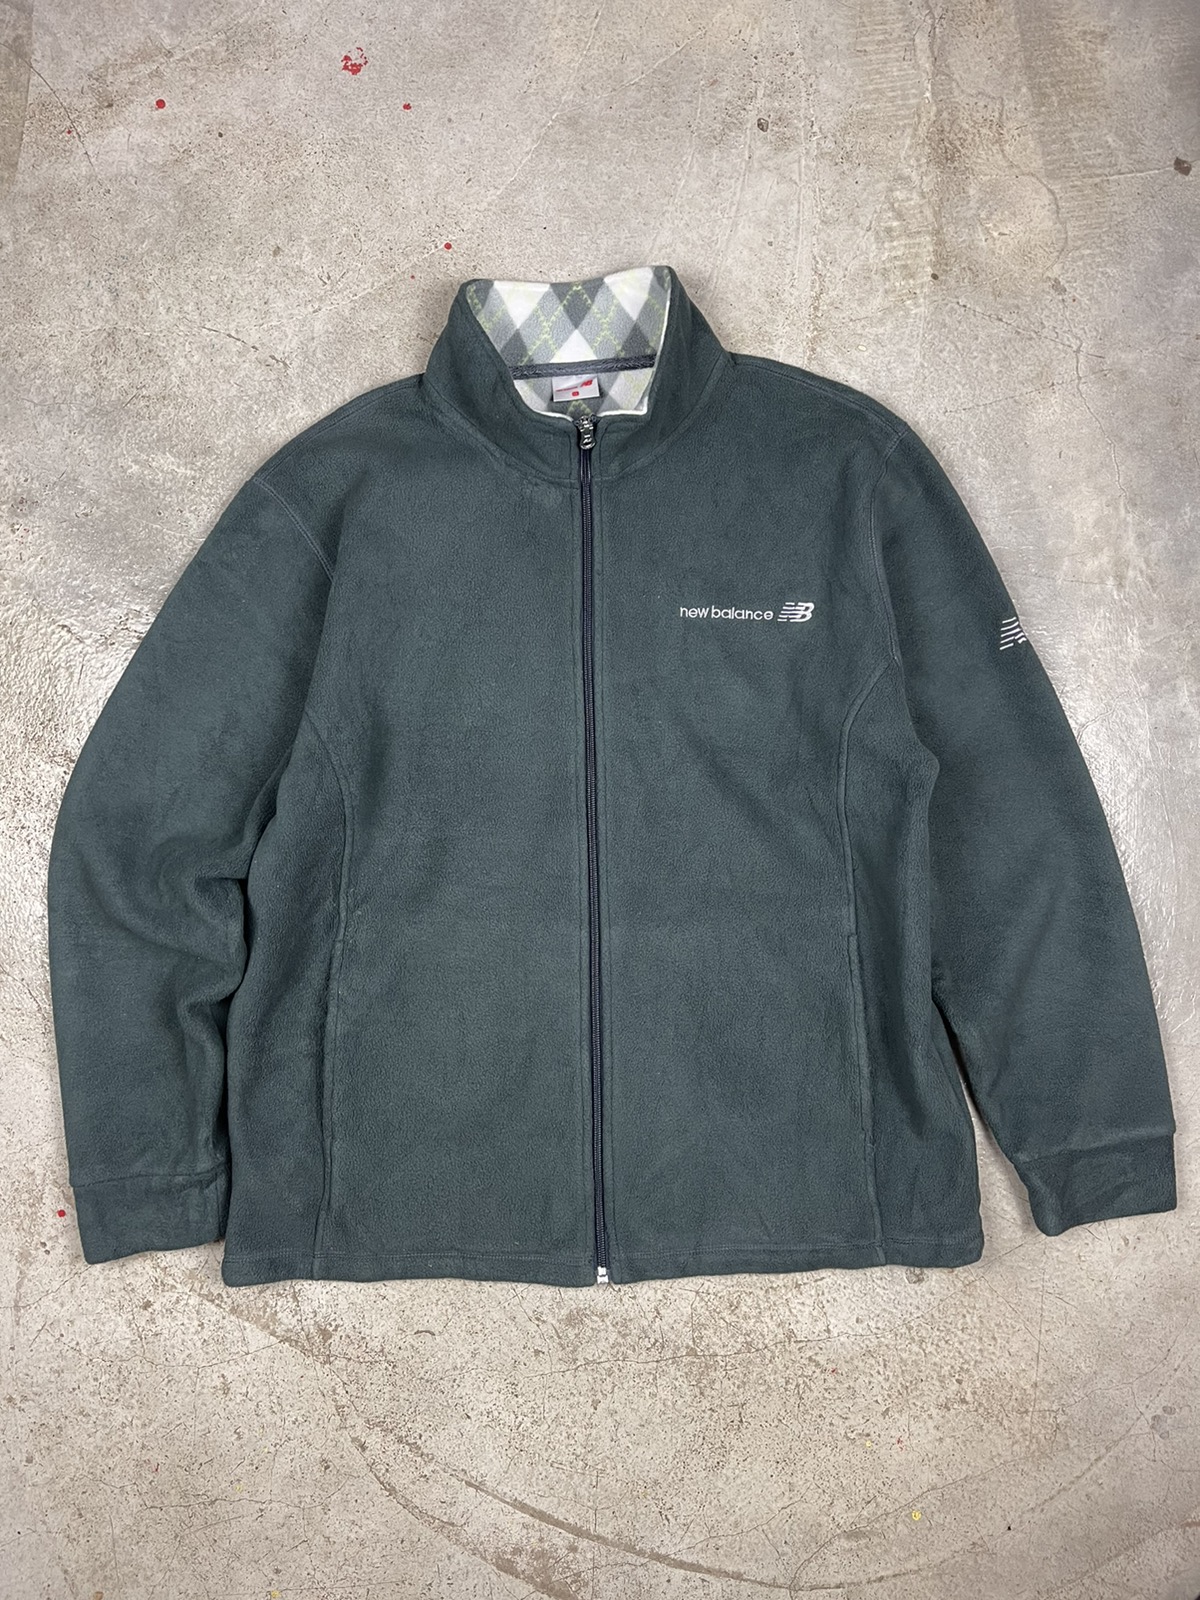 New Balance fleece zipper jacket - 1